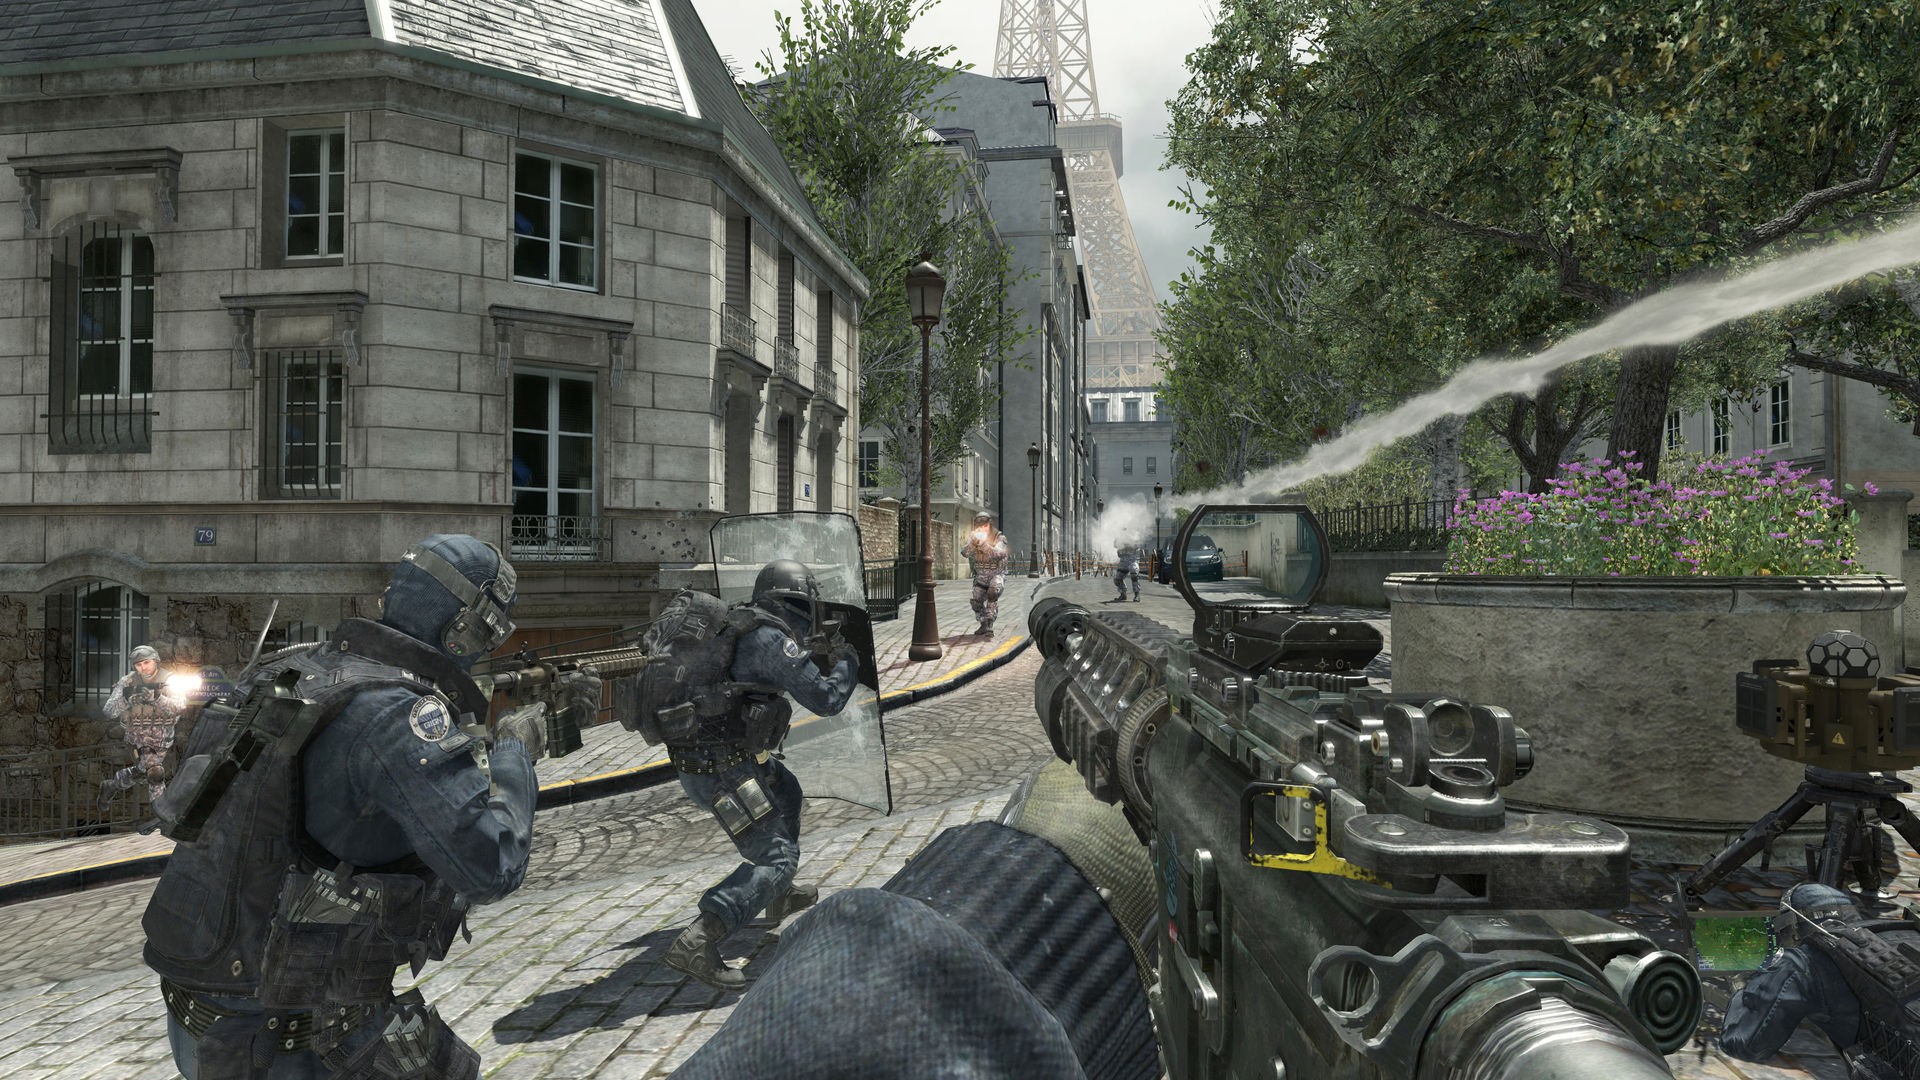 Call of Duty: Modern Warfare 3, Steam Key, PC, Worldwide